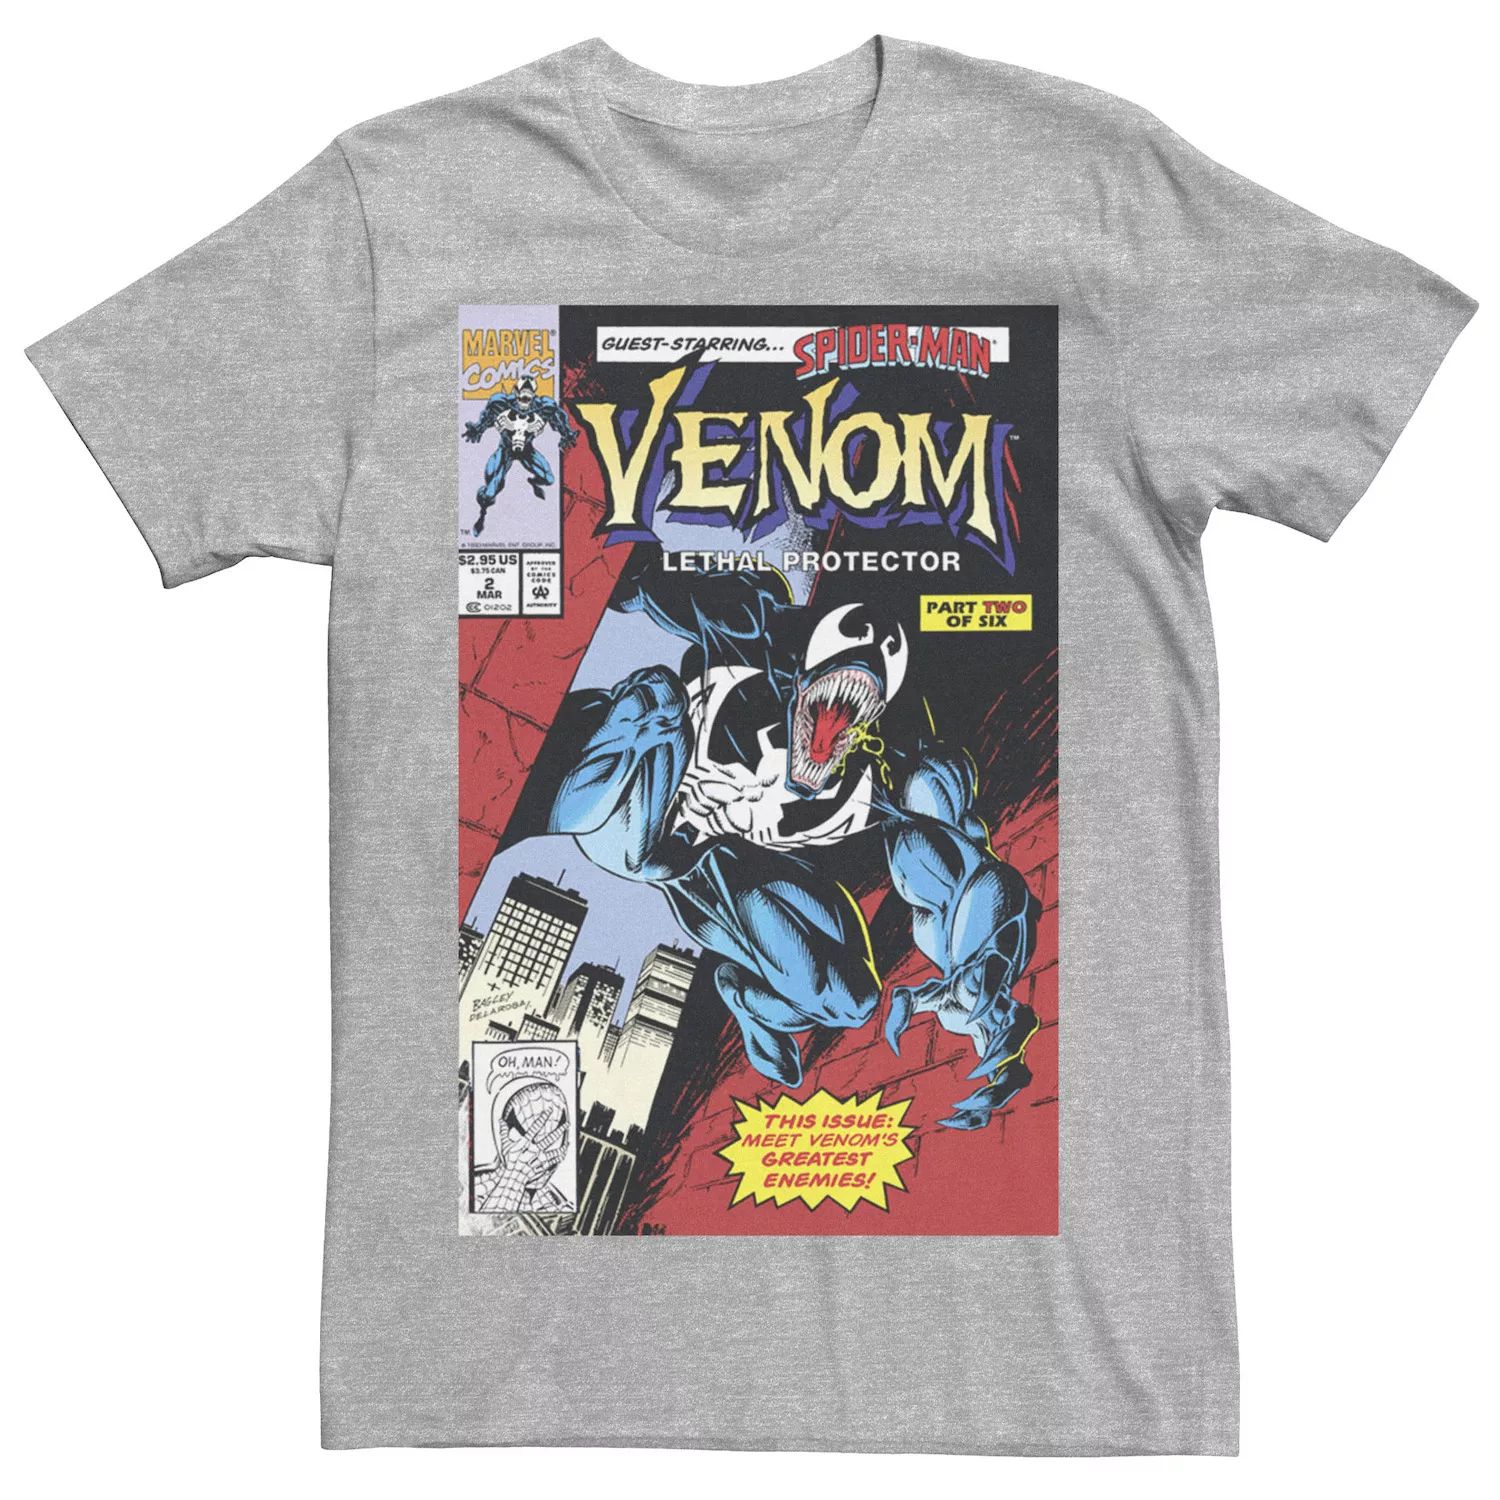 Мужская футболка Venom Lethal Protector в стиле ретро с комиксами Marvel